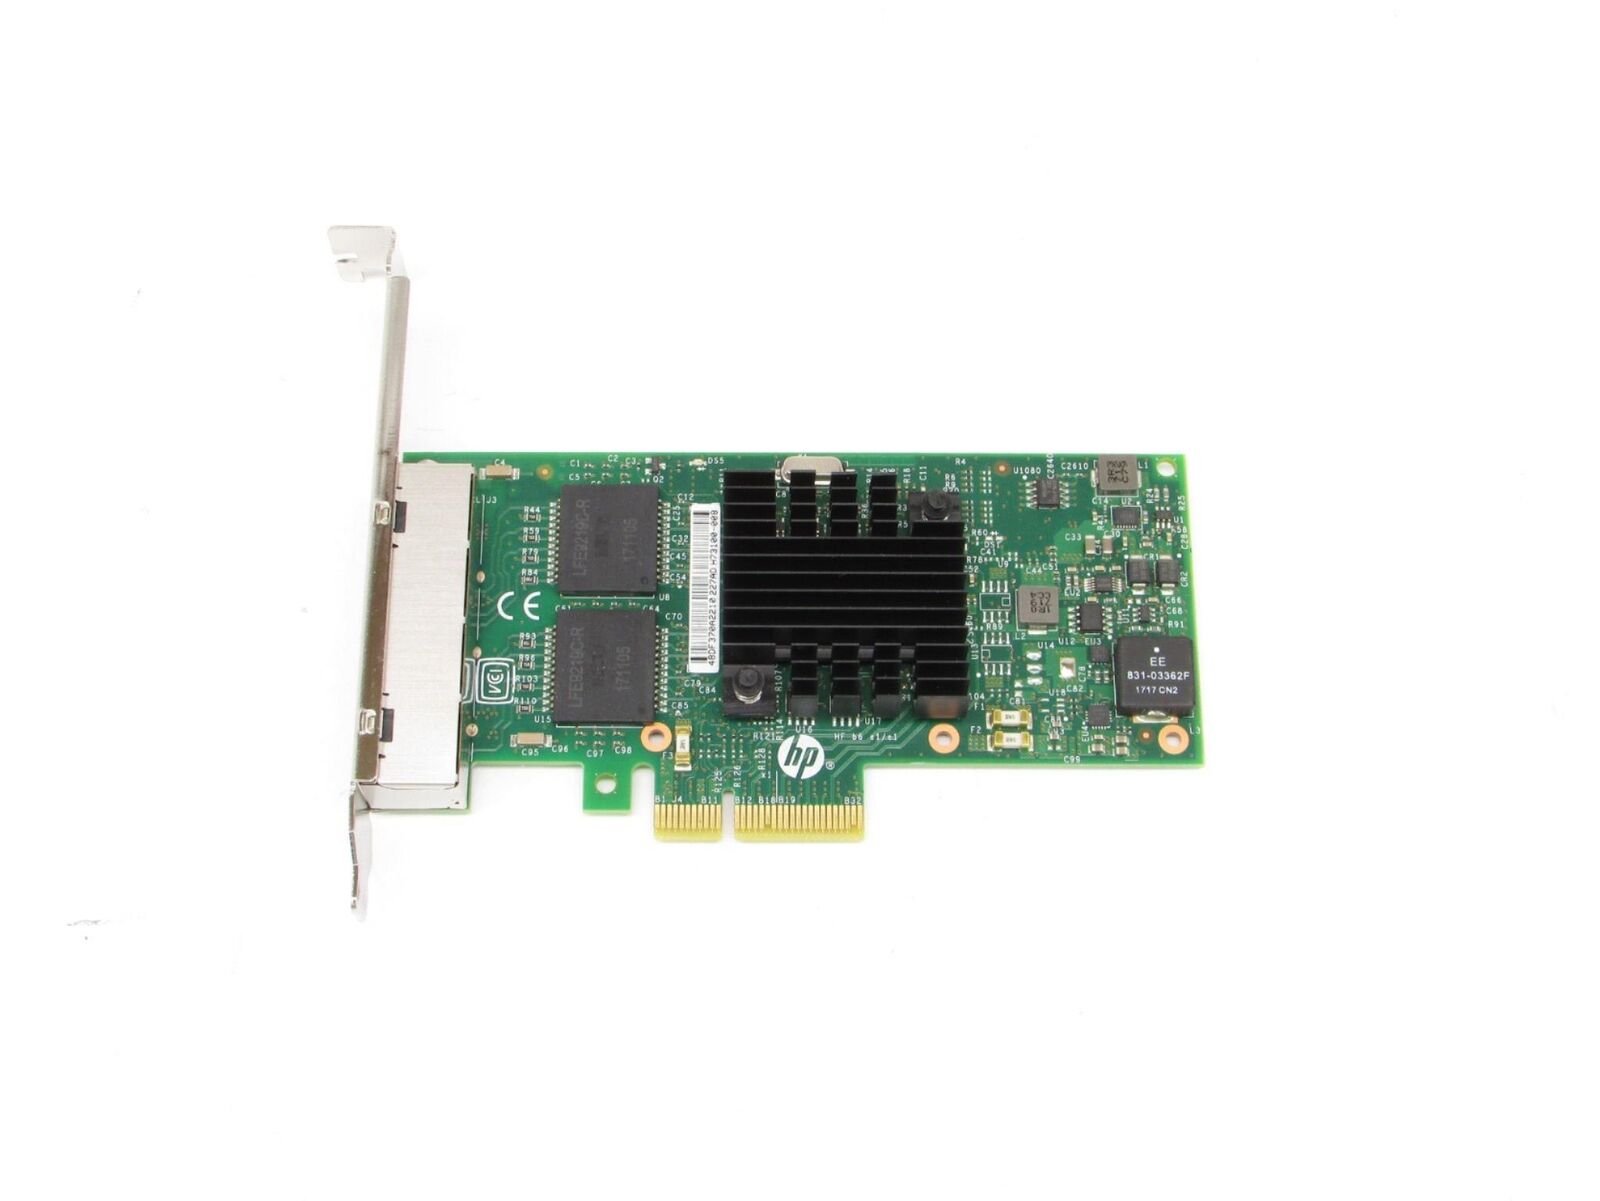 HP 366T 1GB 4-Port Quad-Port 811546-001 Ethernet Network Adapter Card 816551-001